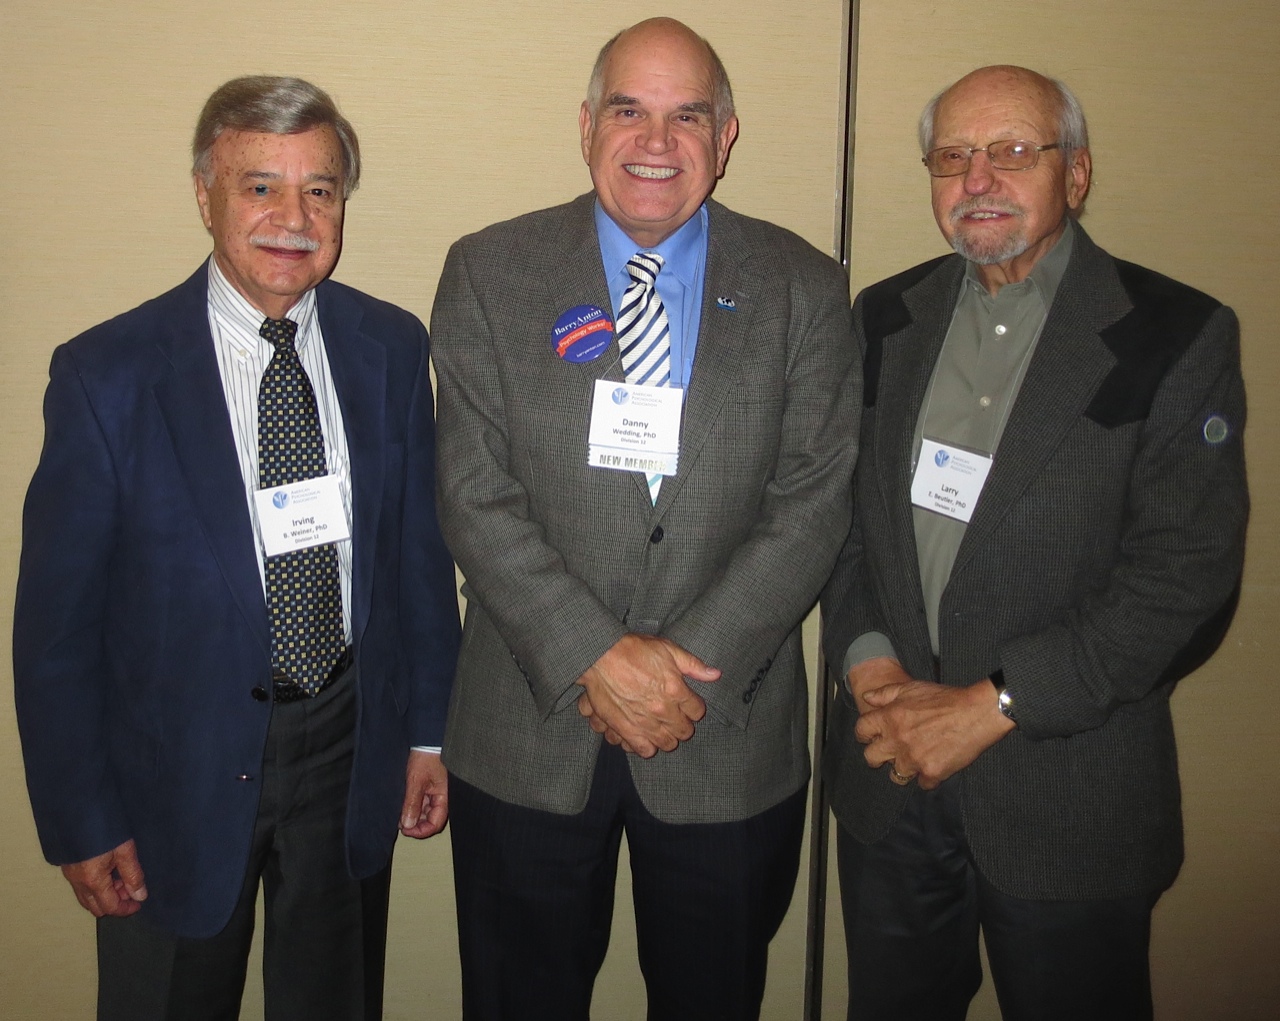 [left to right] Irving Weiner, Ph.D., Danny Wedding, Ph.D., Larry Beutler, Ph.d